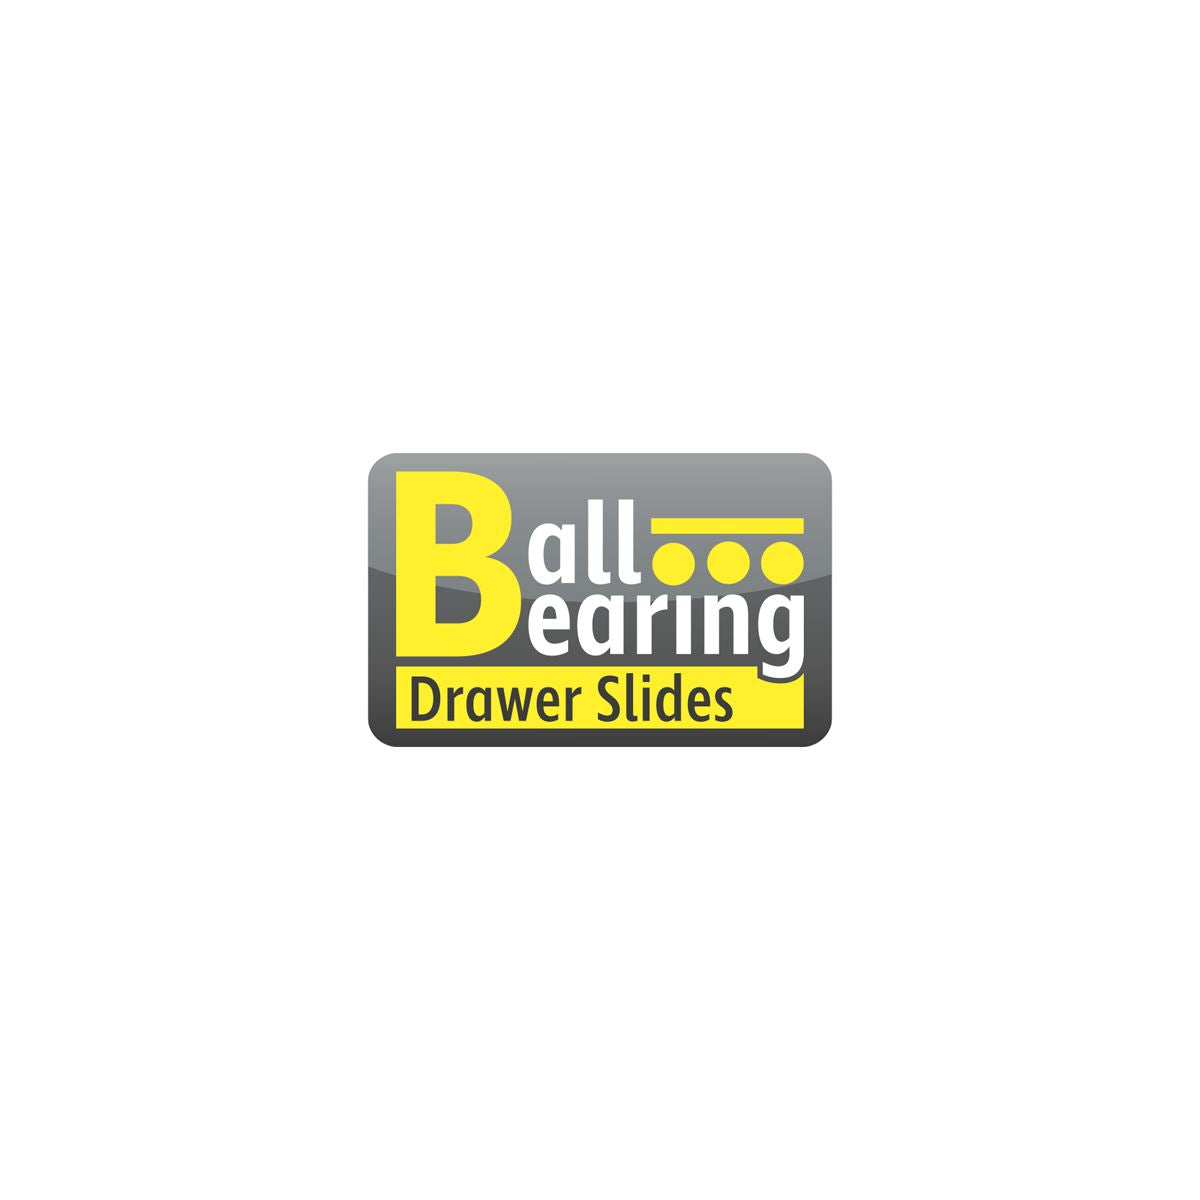 Sealey Rollcab 7 Drawer with Ball Bearing Slides - Black AP26479TB